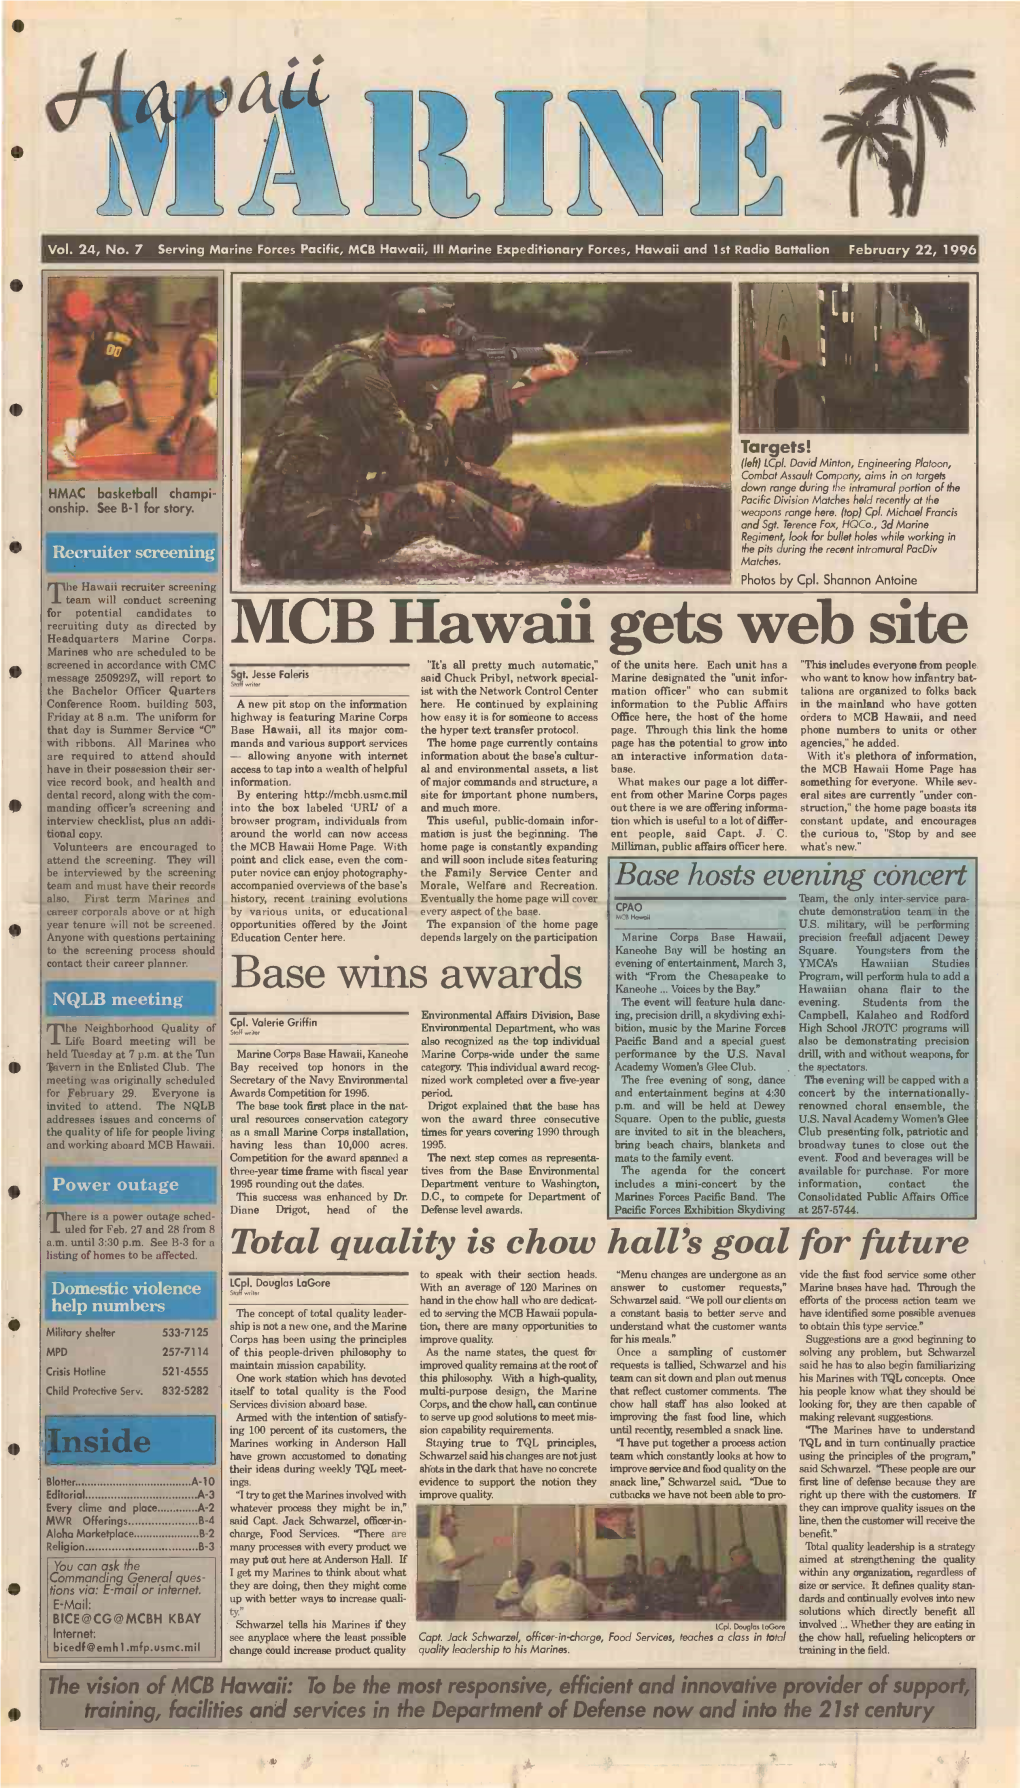 MCB Hawaii Gets Web Site